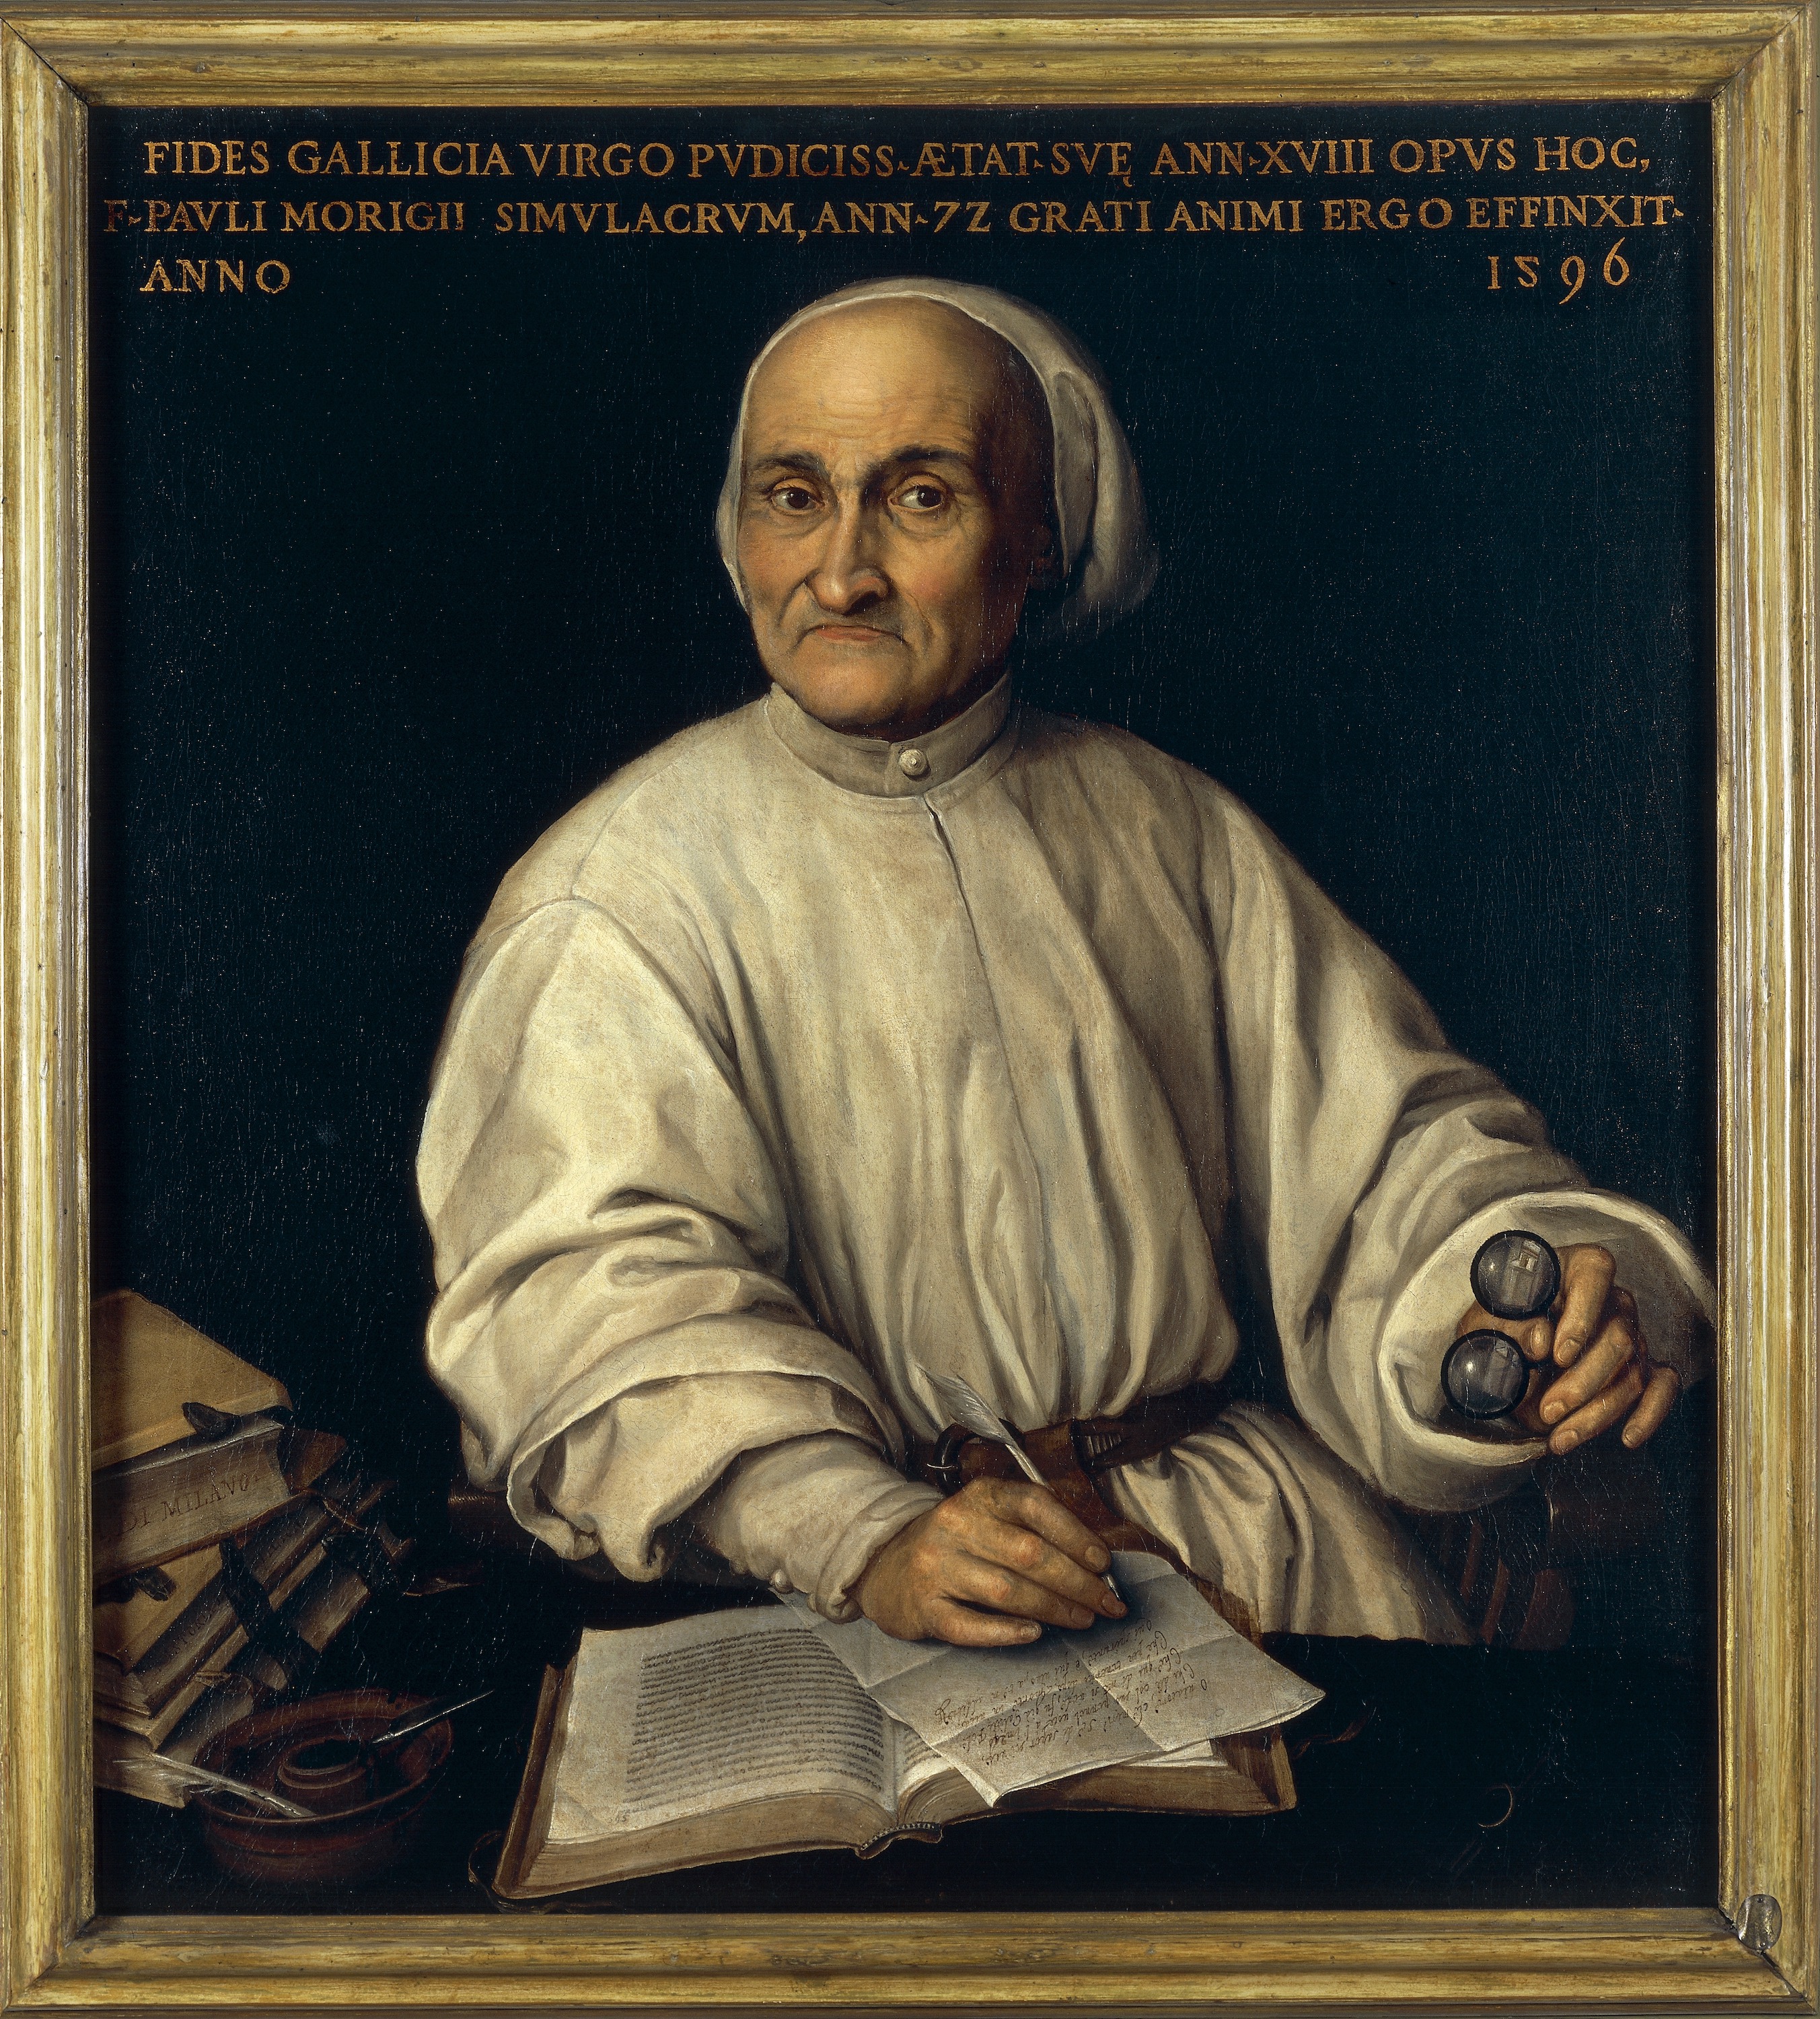 Porträt von Paolo Morigia by Fede Galizia - c. 1592 - 1595 - 88 x 79 cm Pinacoteca Ambrosiana